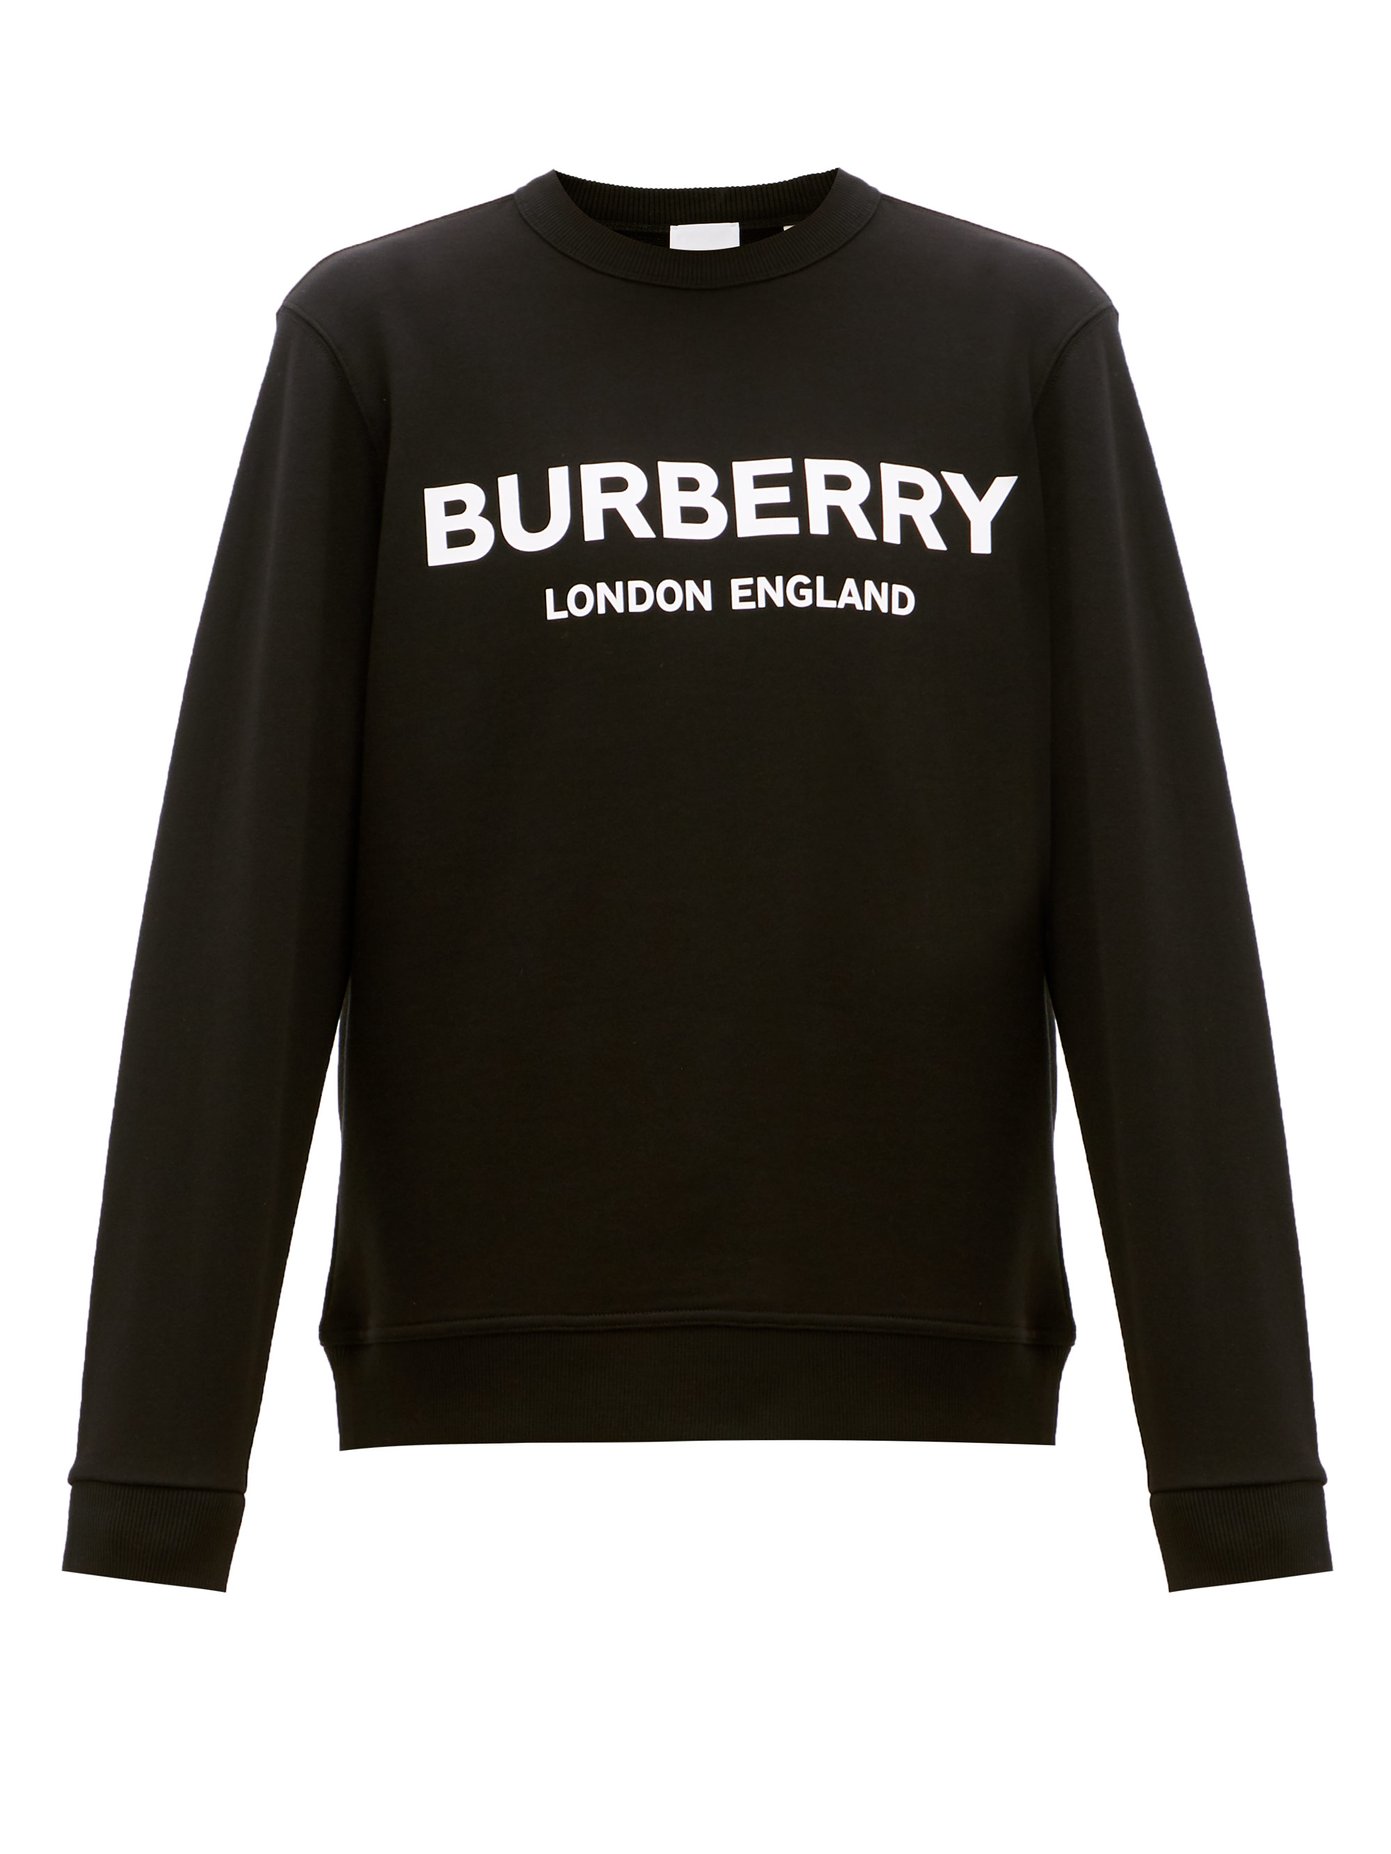 burberry logo sweater